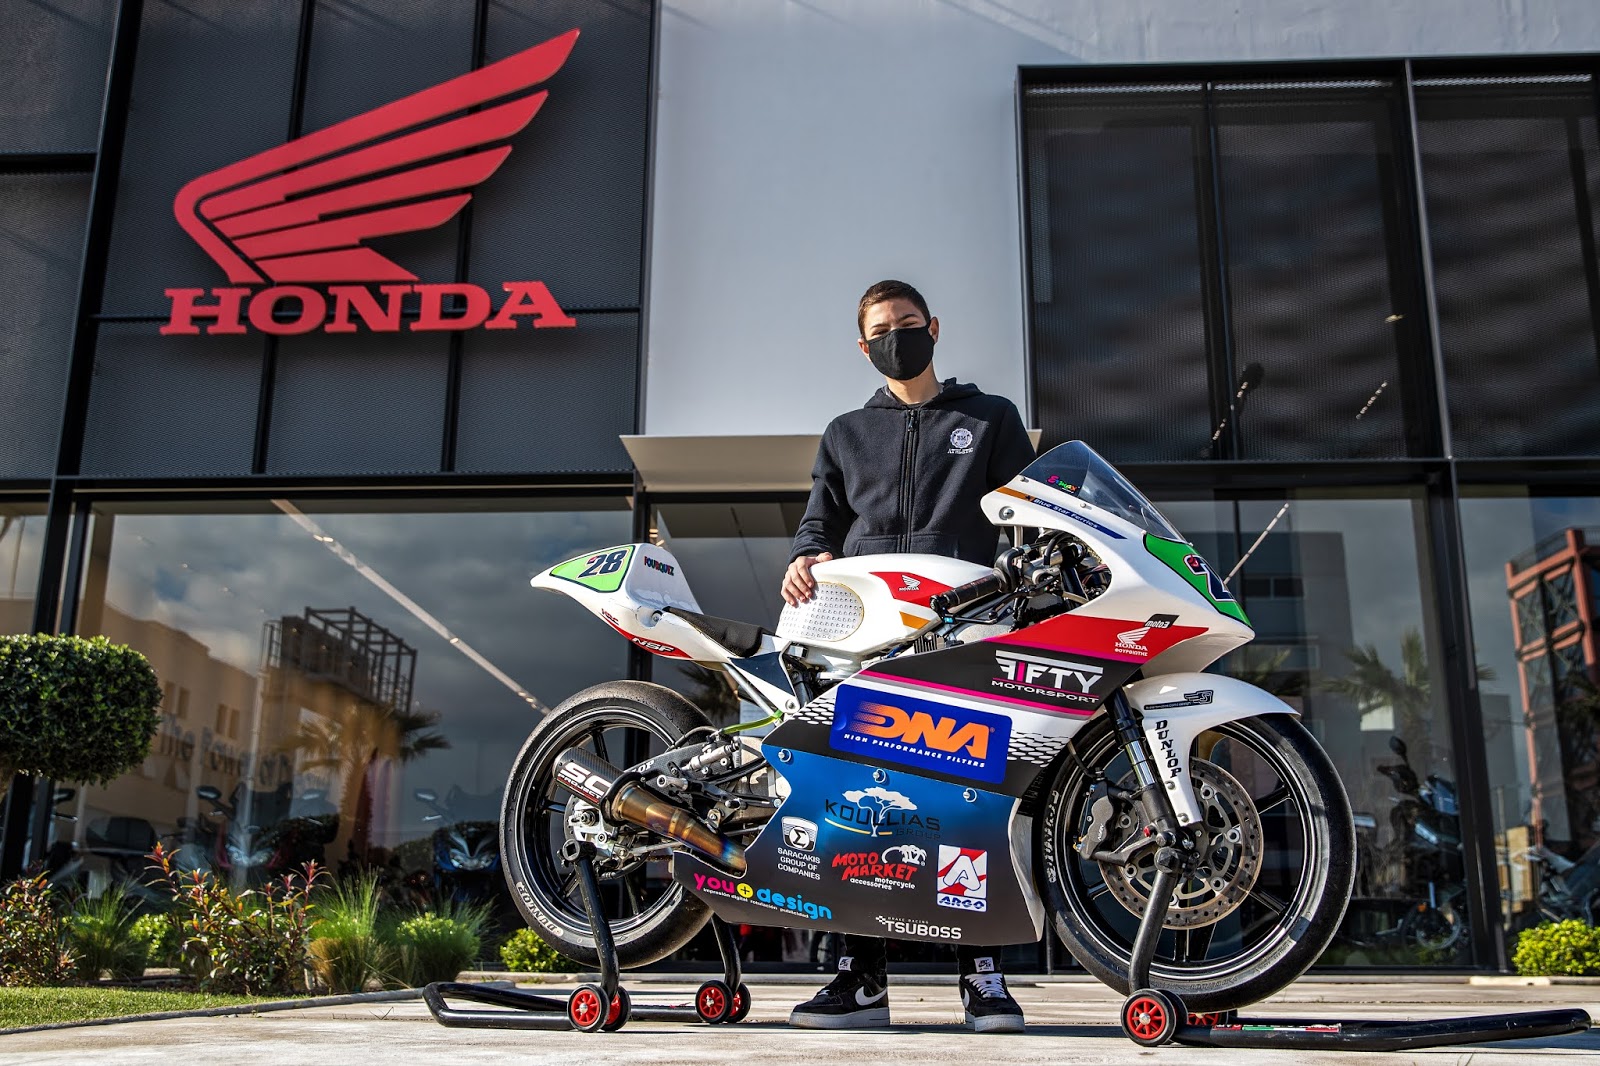 1DX07678 Ο Όμιλος Επιχειρήσεων Σαρακάκη και η Honda Moto, υποστηρίζουν τον Σπύρο Μάριο Φουρθιώτη